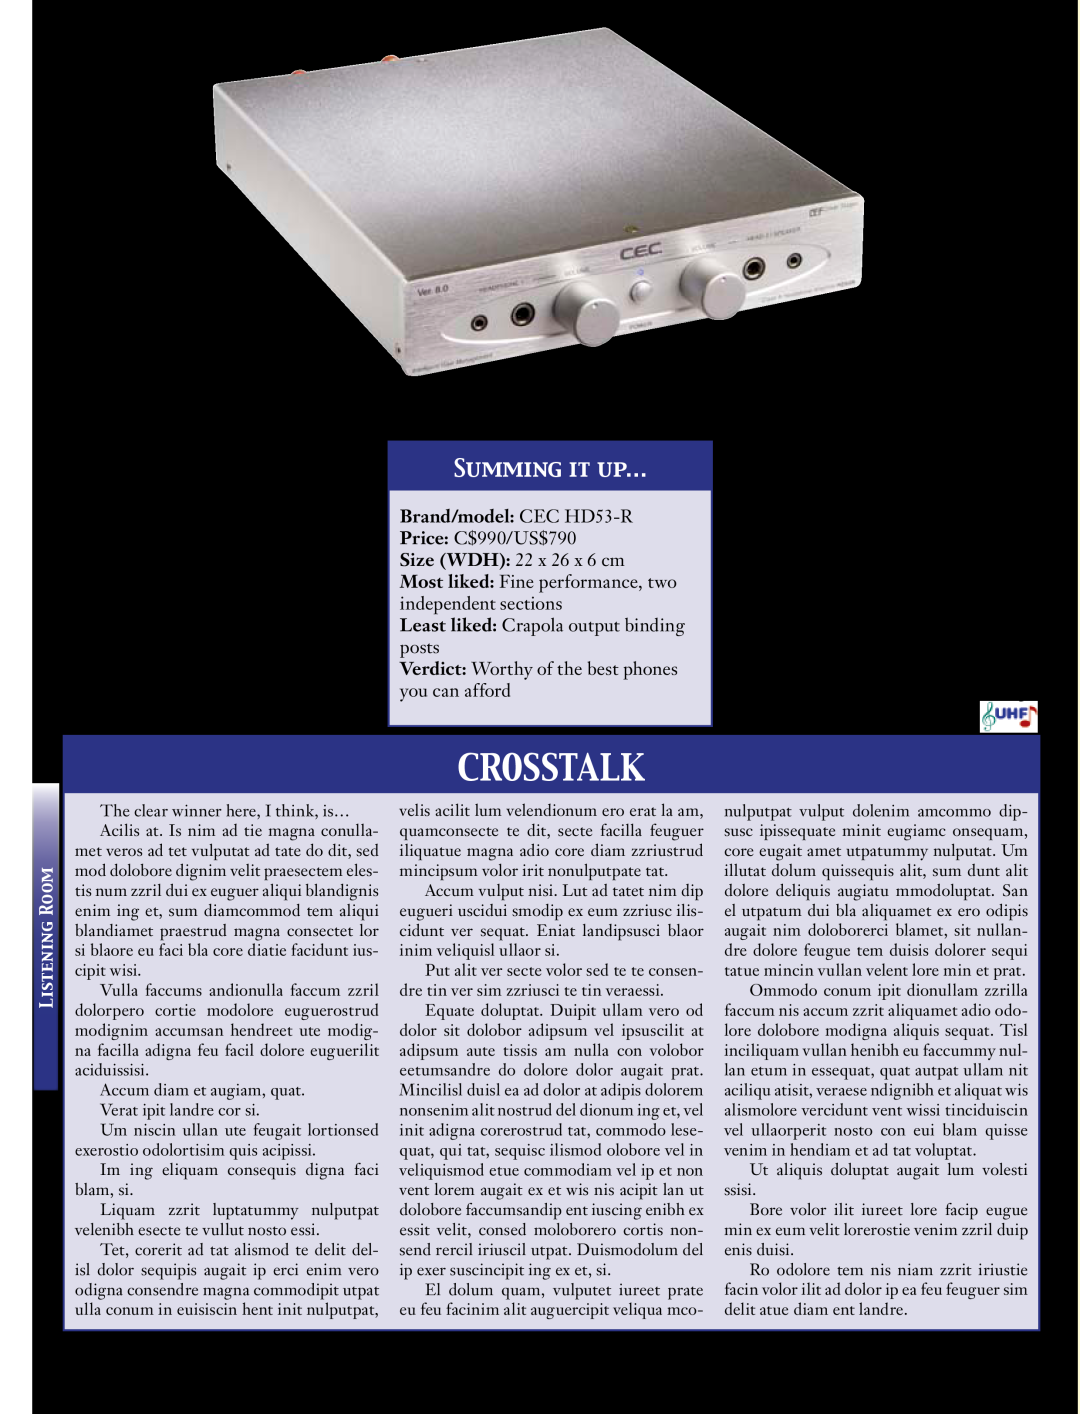 Koss 76 manual Crosstalk, Summing It Up…, Brand/model CEC HD53-R 